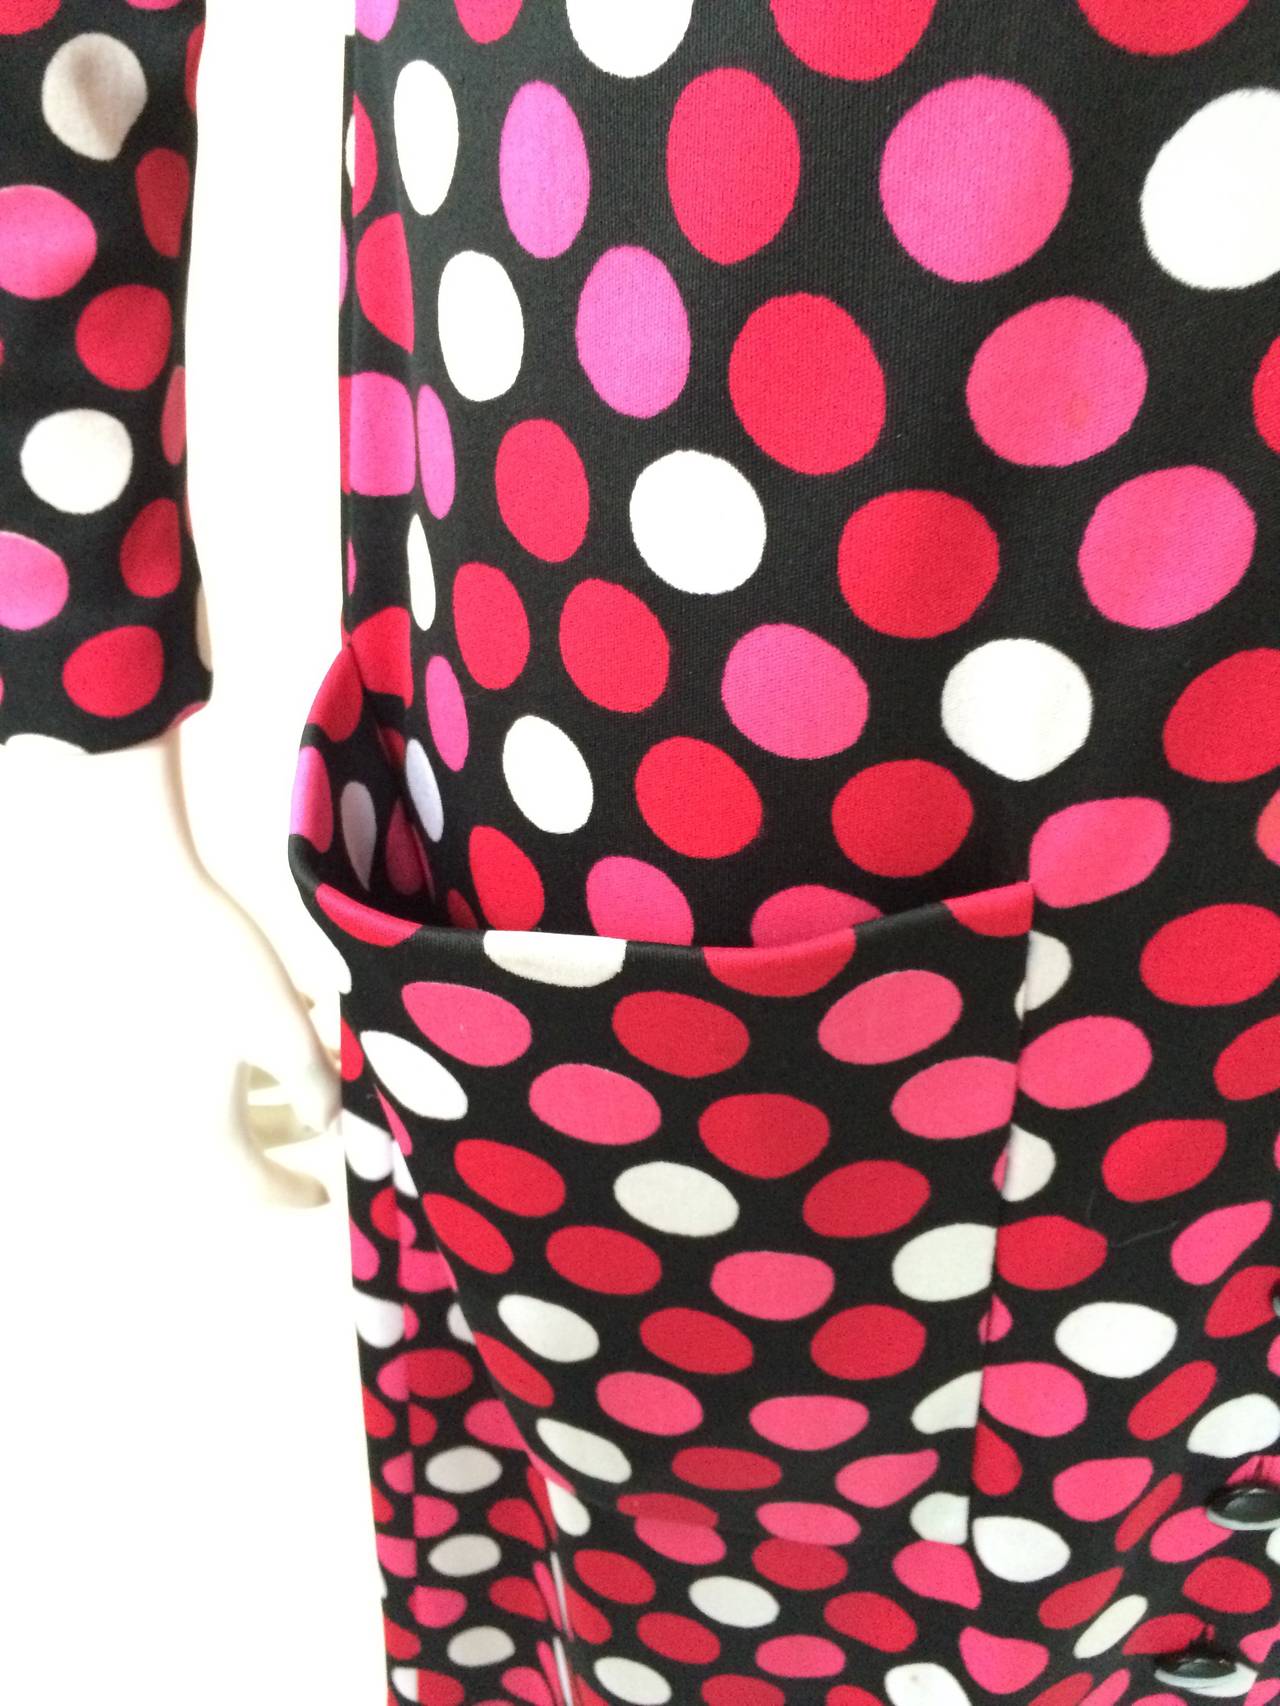 Women's Pauline Trigere 80s polka dot dress. For Sale